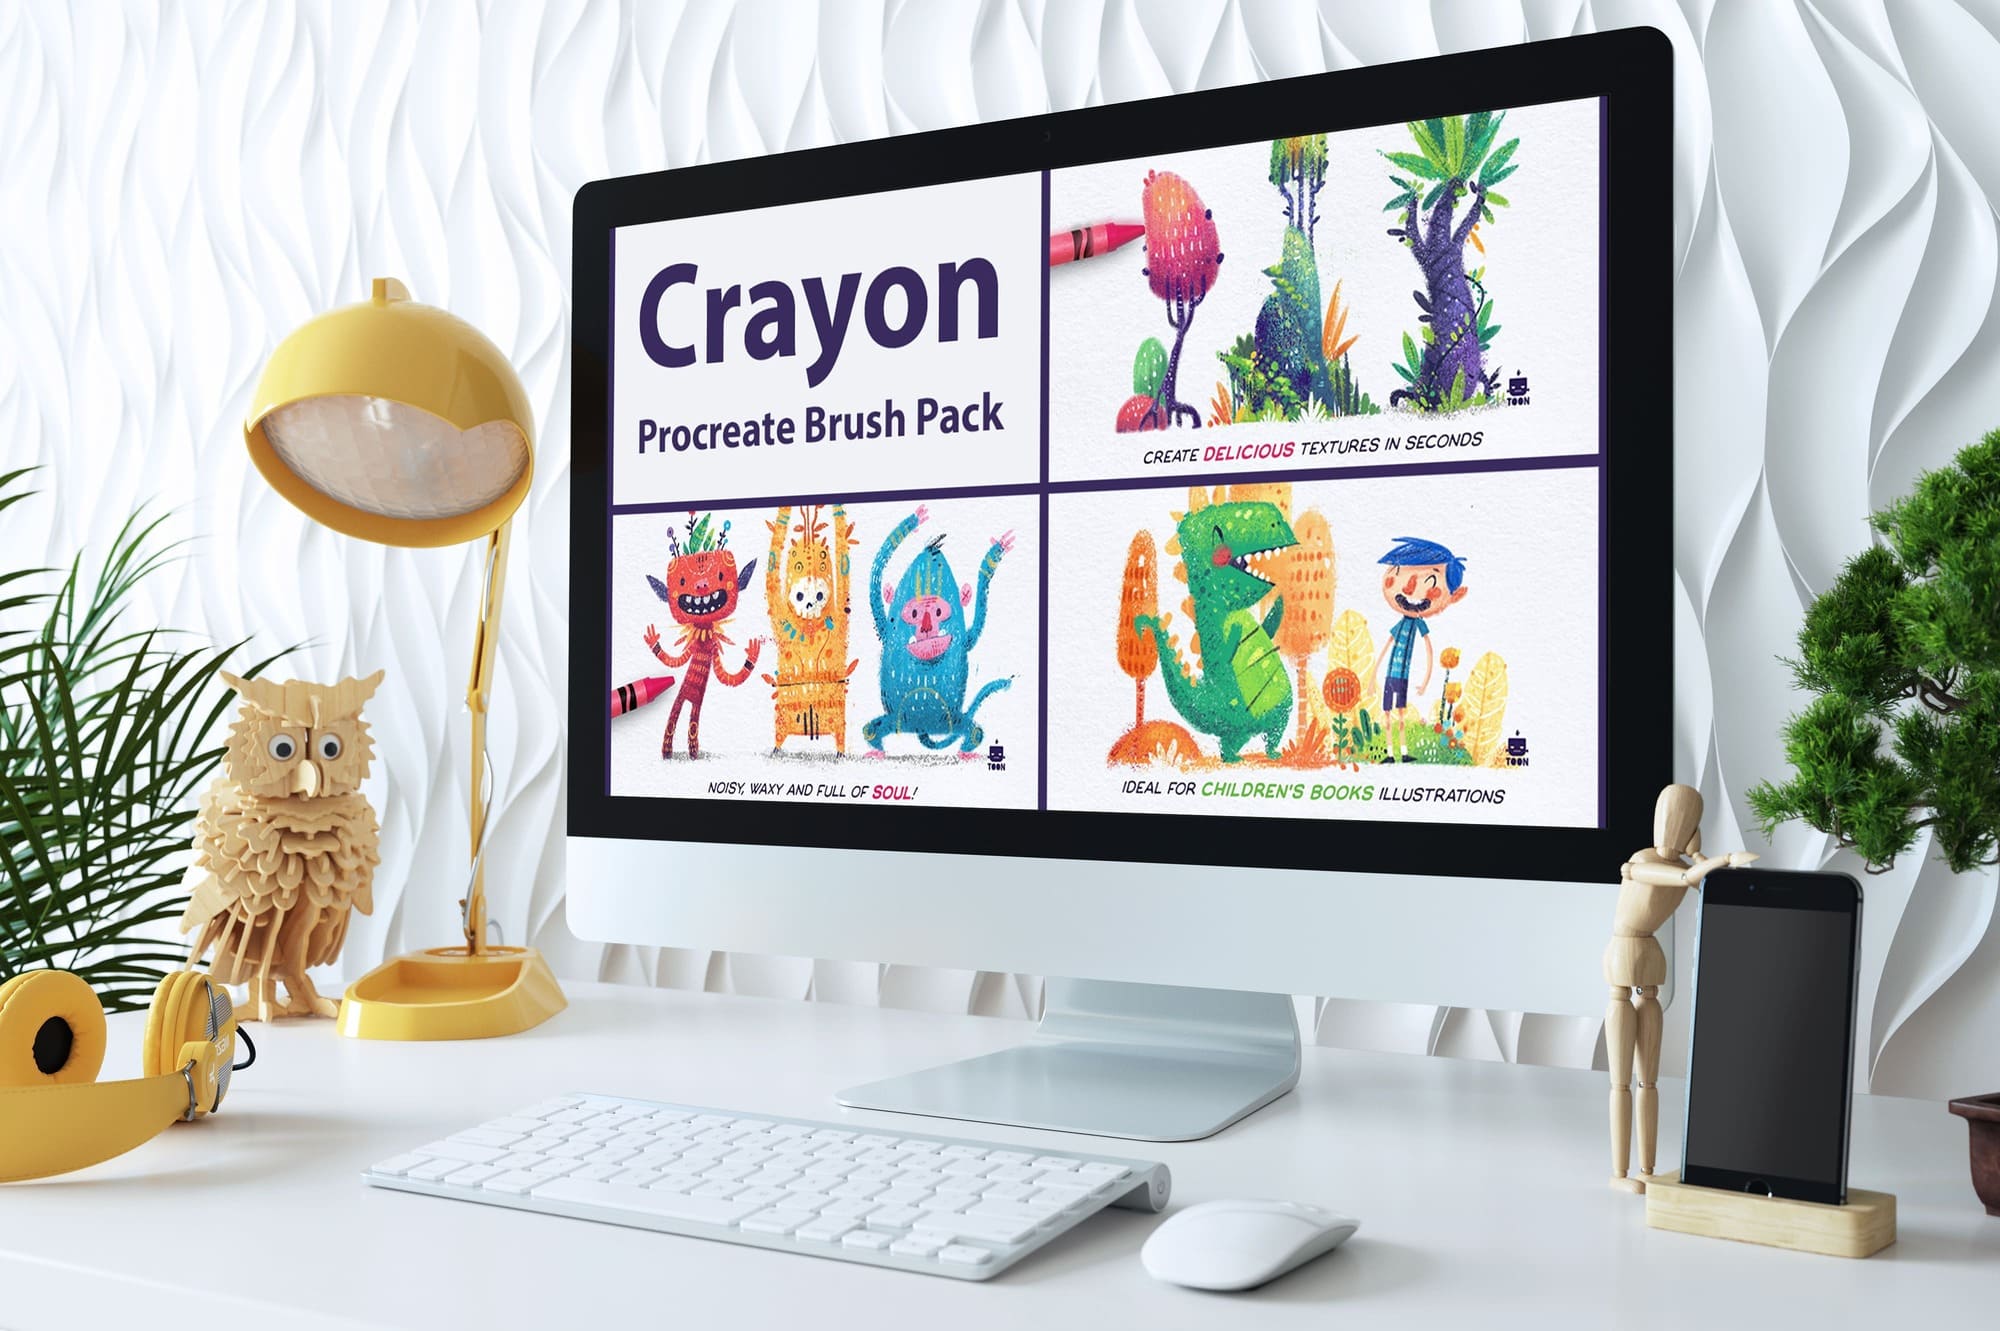 Crayon Procreate Brush Pack On The Monoblock.